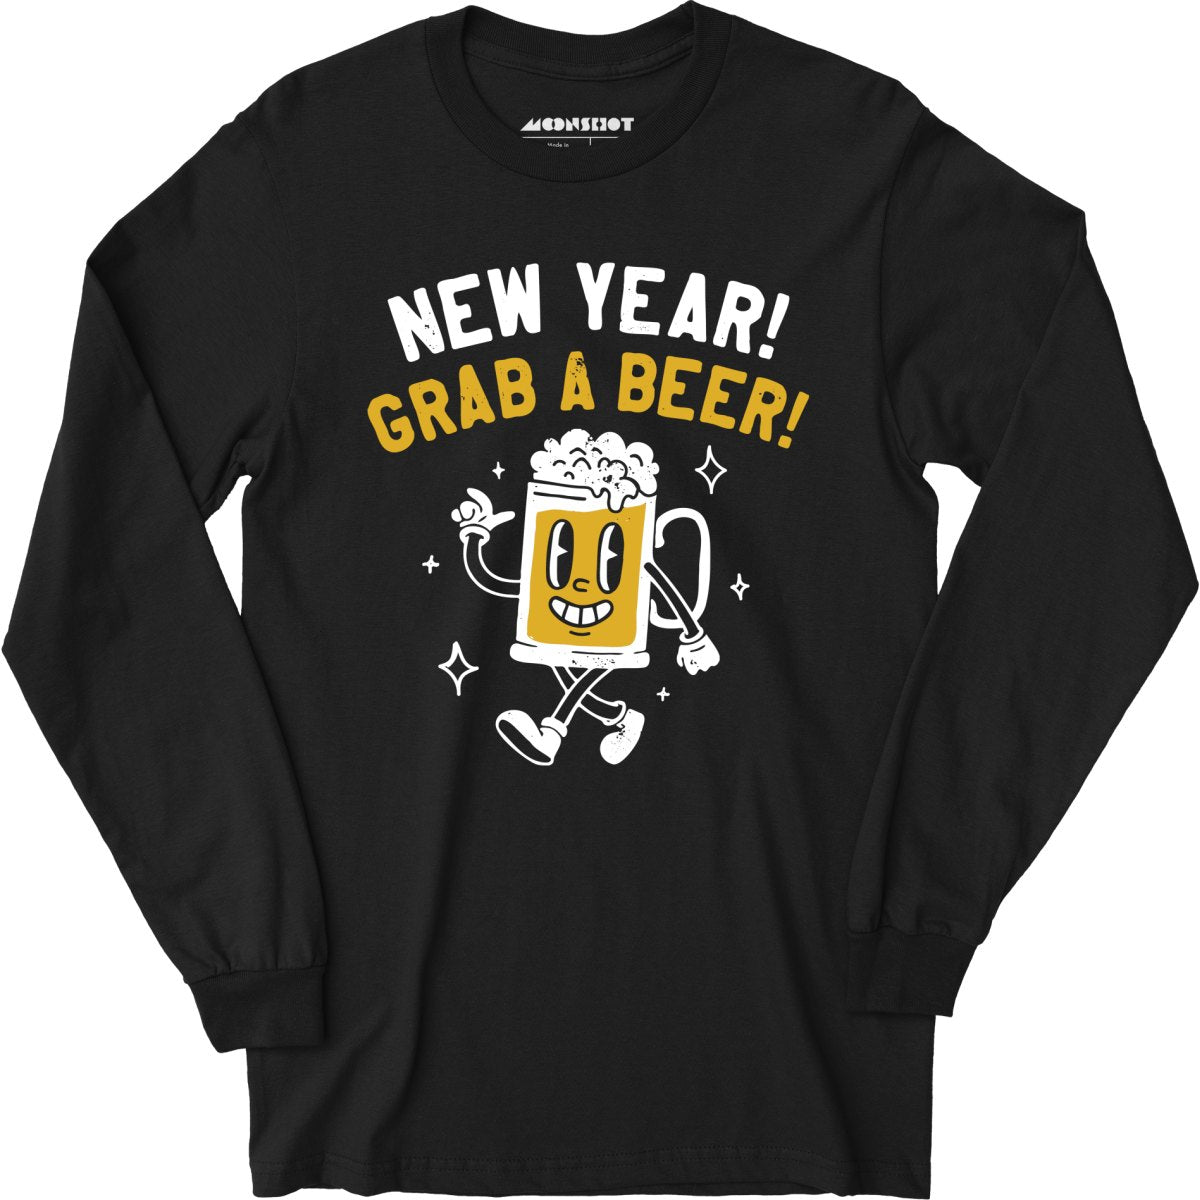 New Year Grab a Beer - Long Sleeve T-Shirt